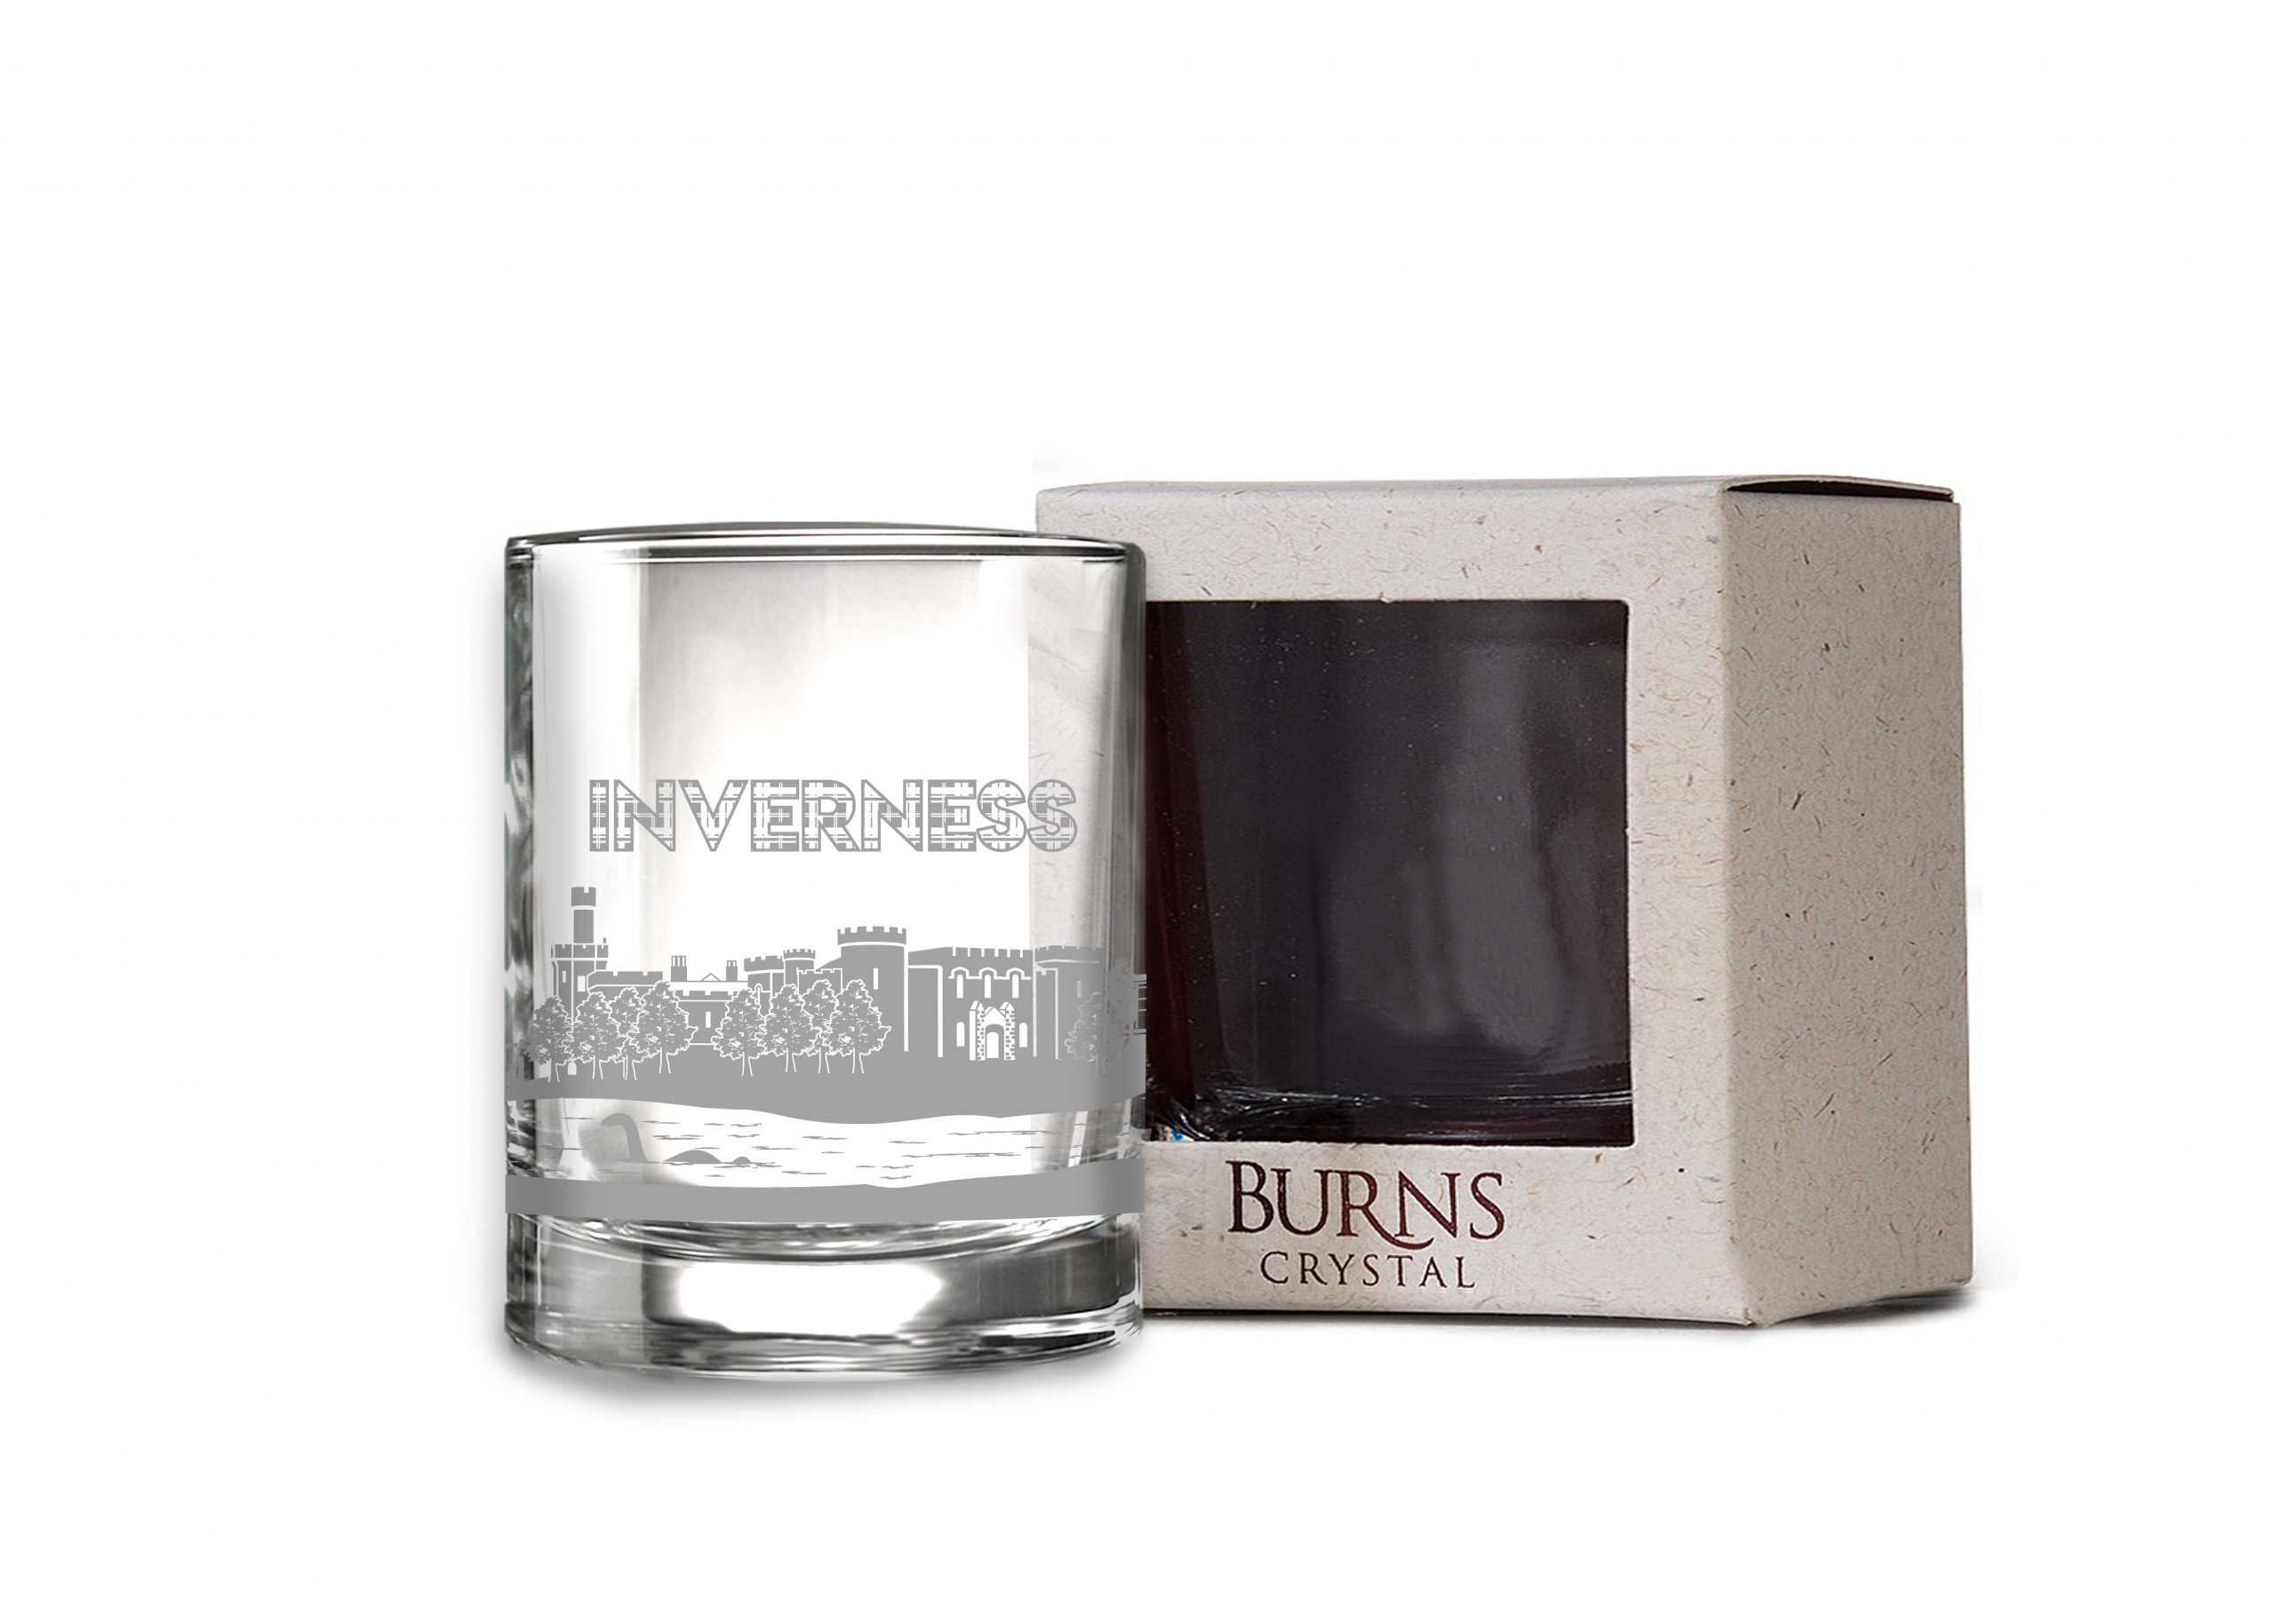 Burns Scottish Gift Skyline Range Inverness | Inverness gifts